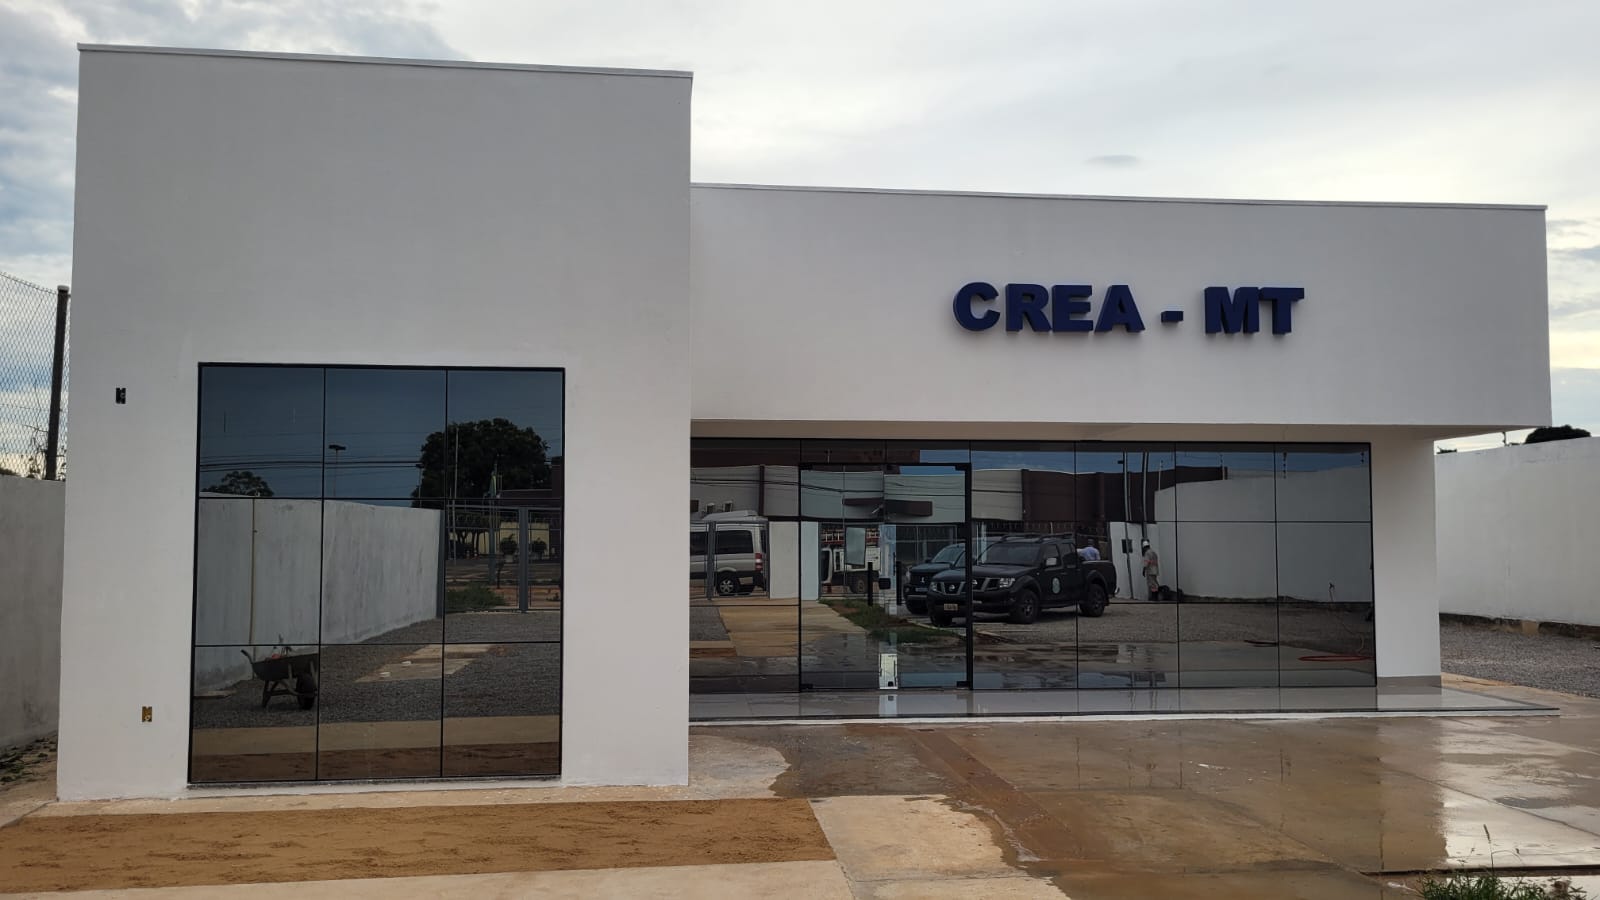 Avano na engenharia e agronomia, Crea-MT inaugura sede em Cceres